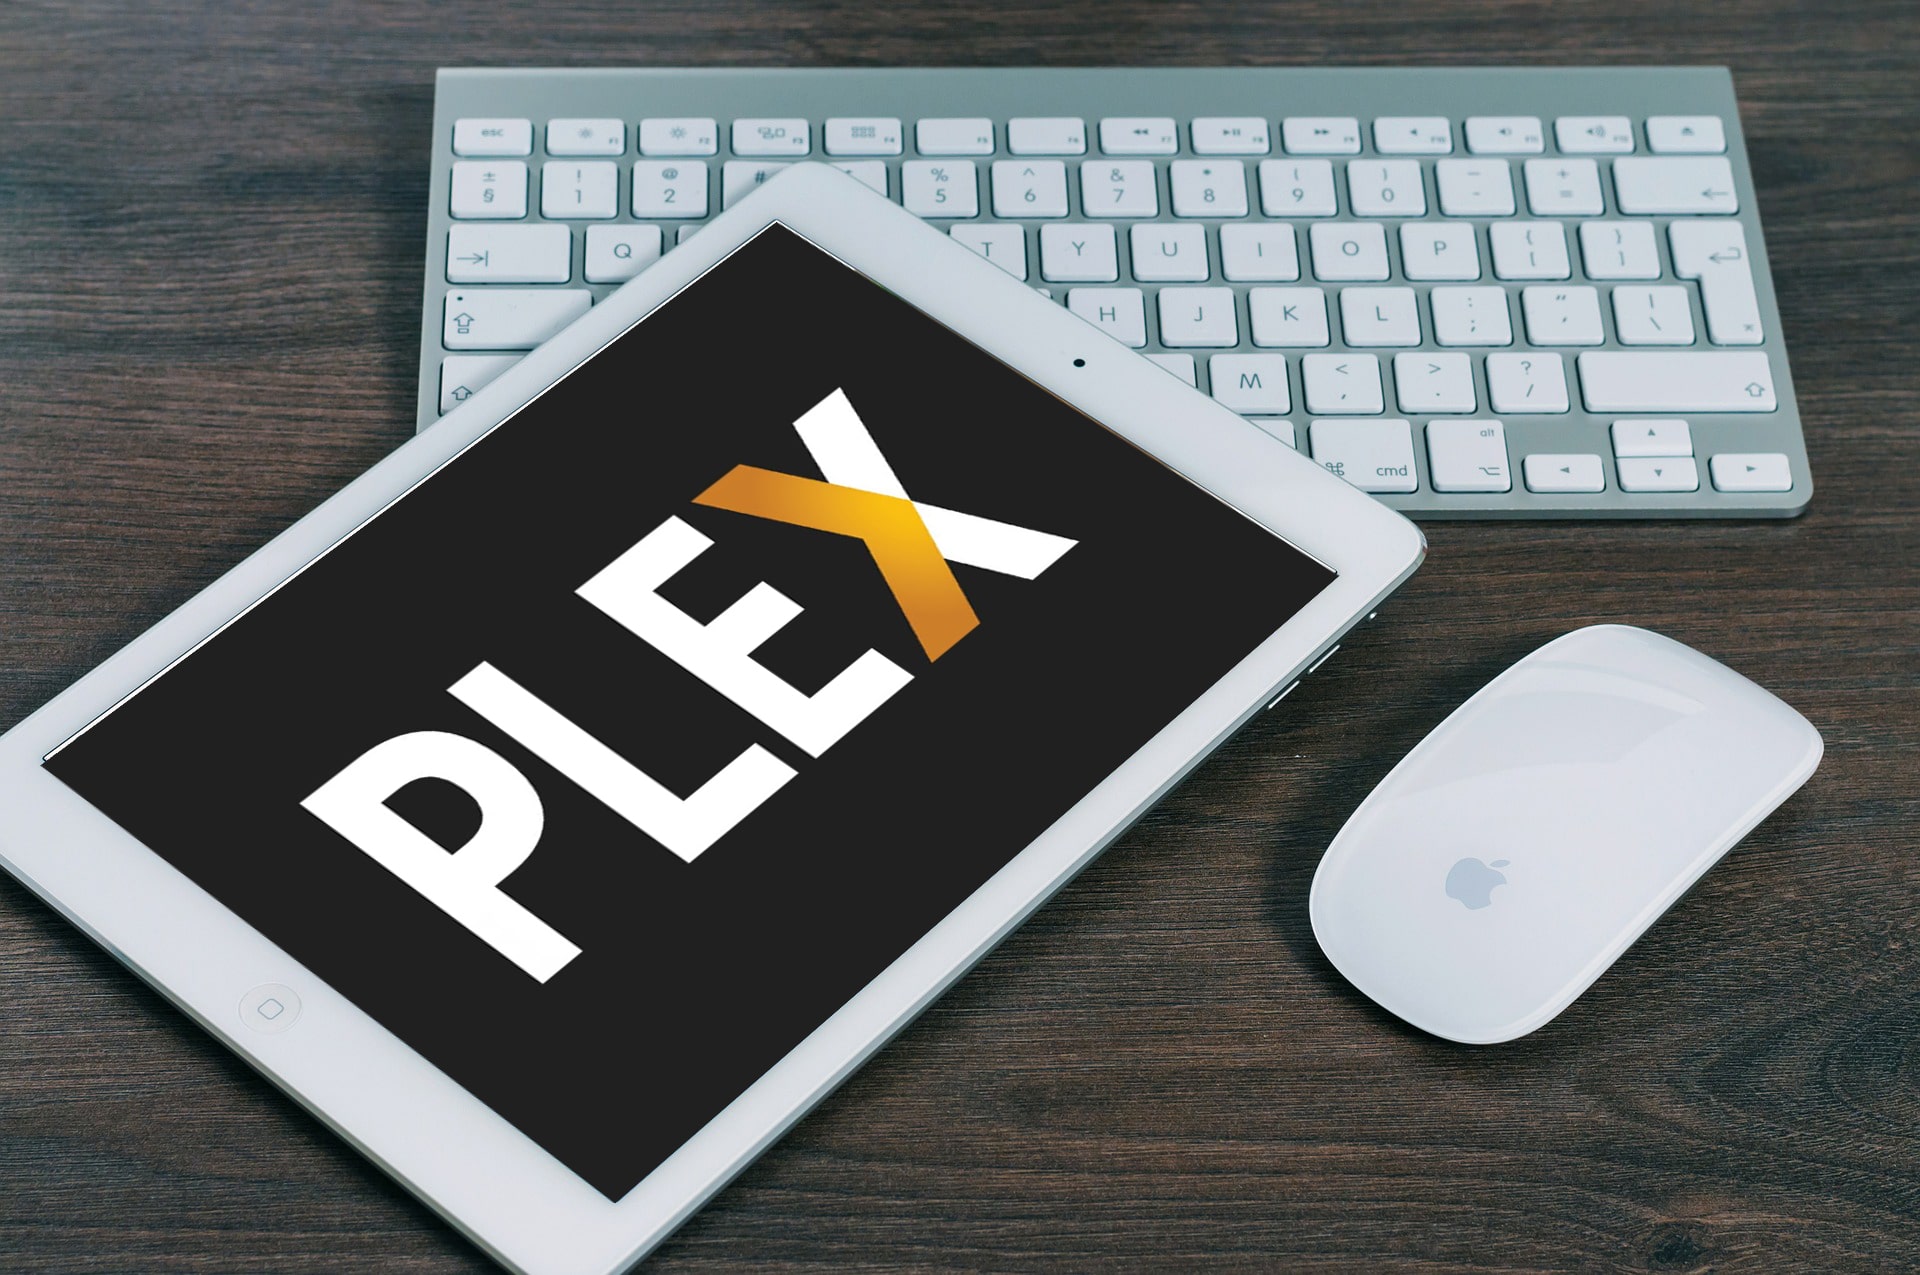 best plex media server